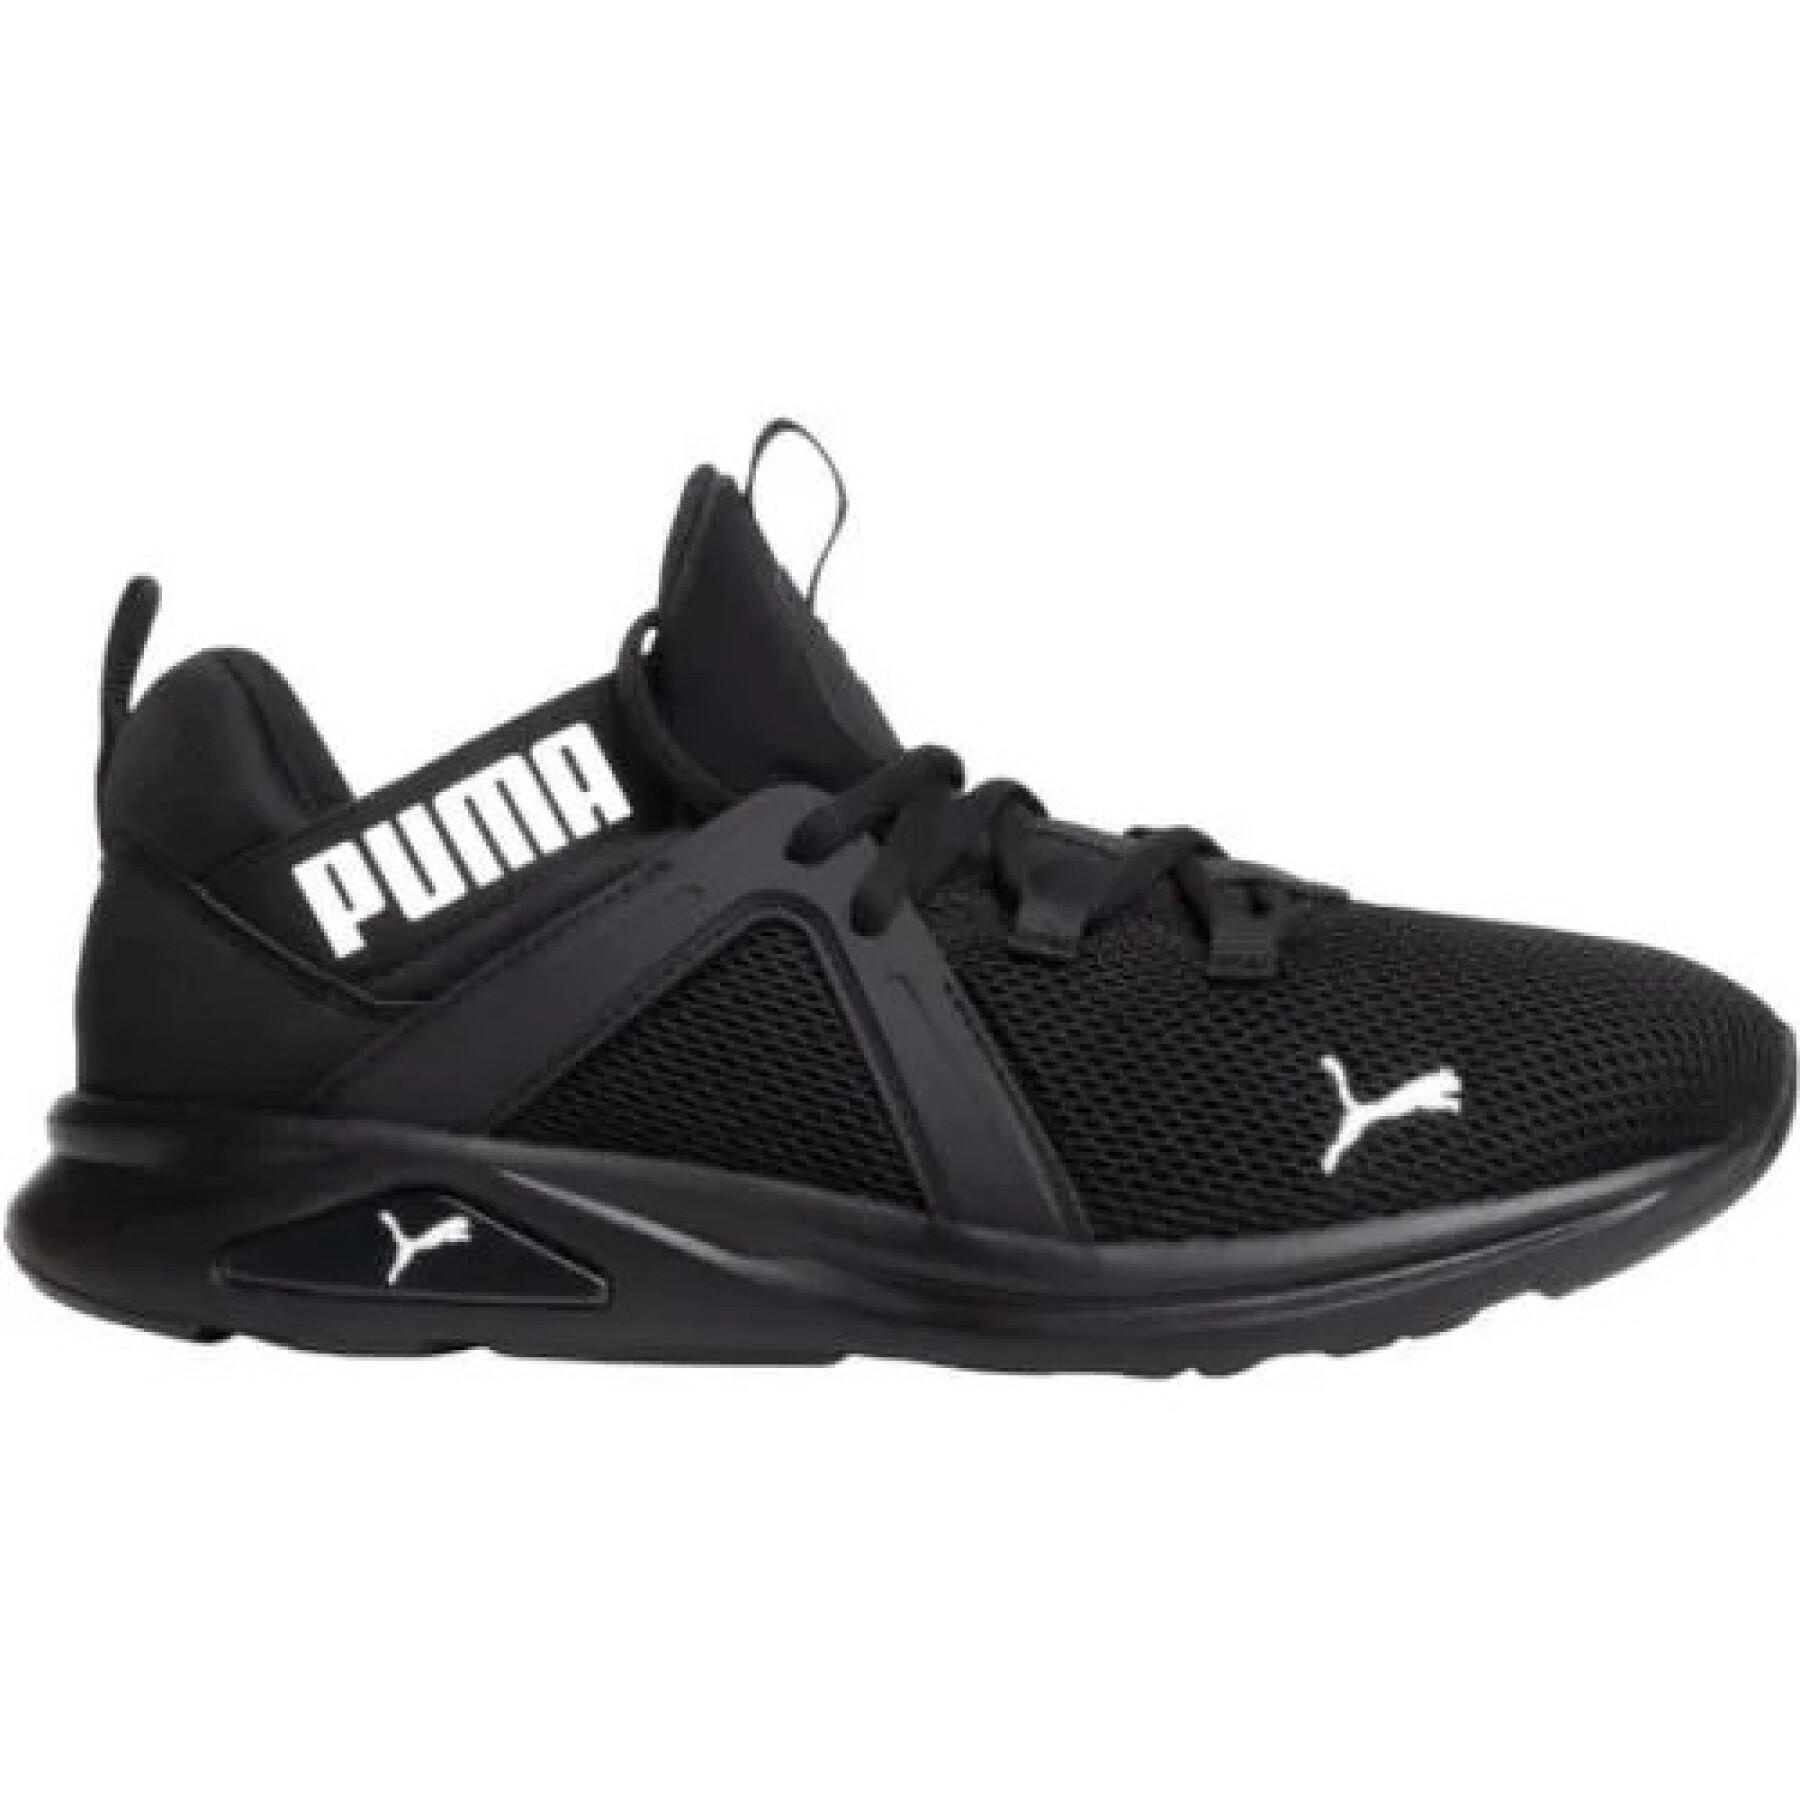 Schuhe Puma Enzo 2